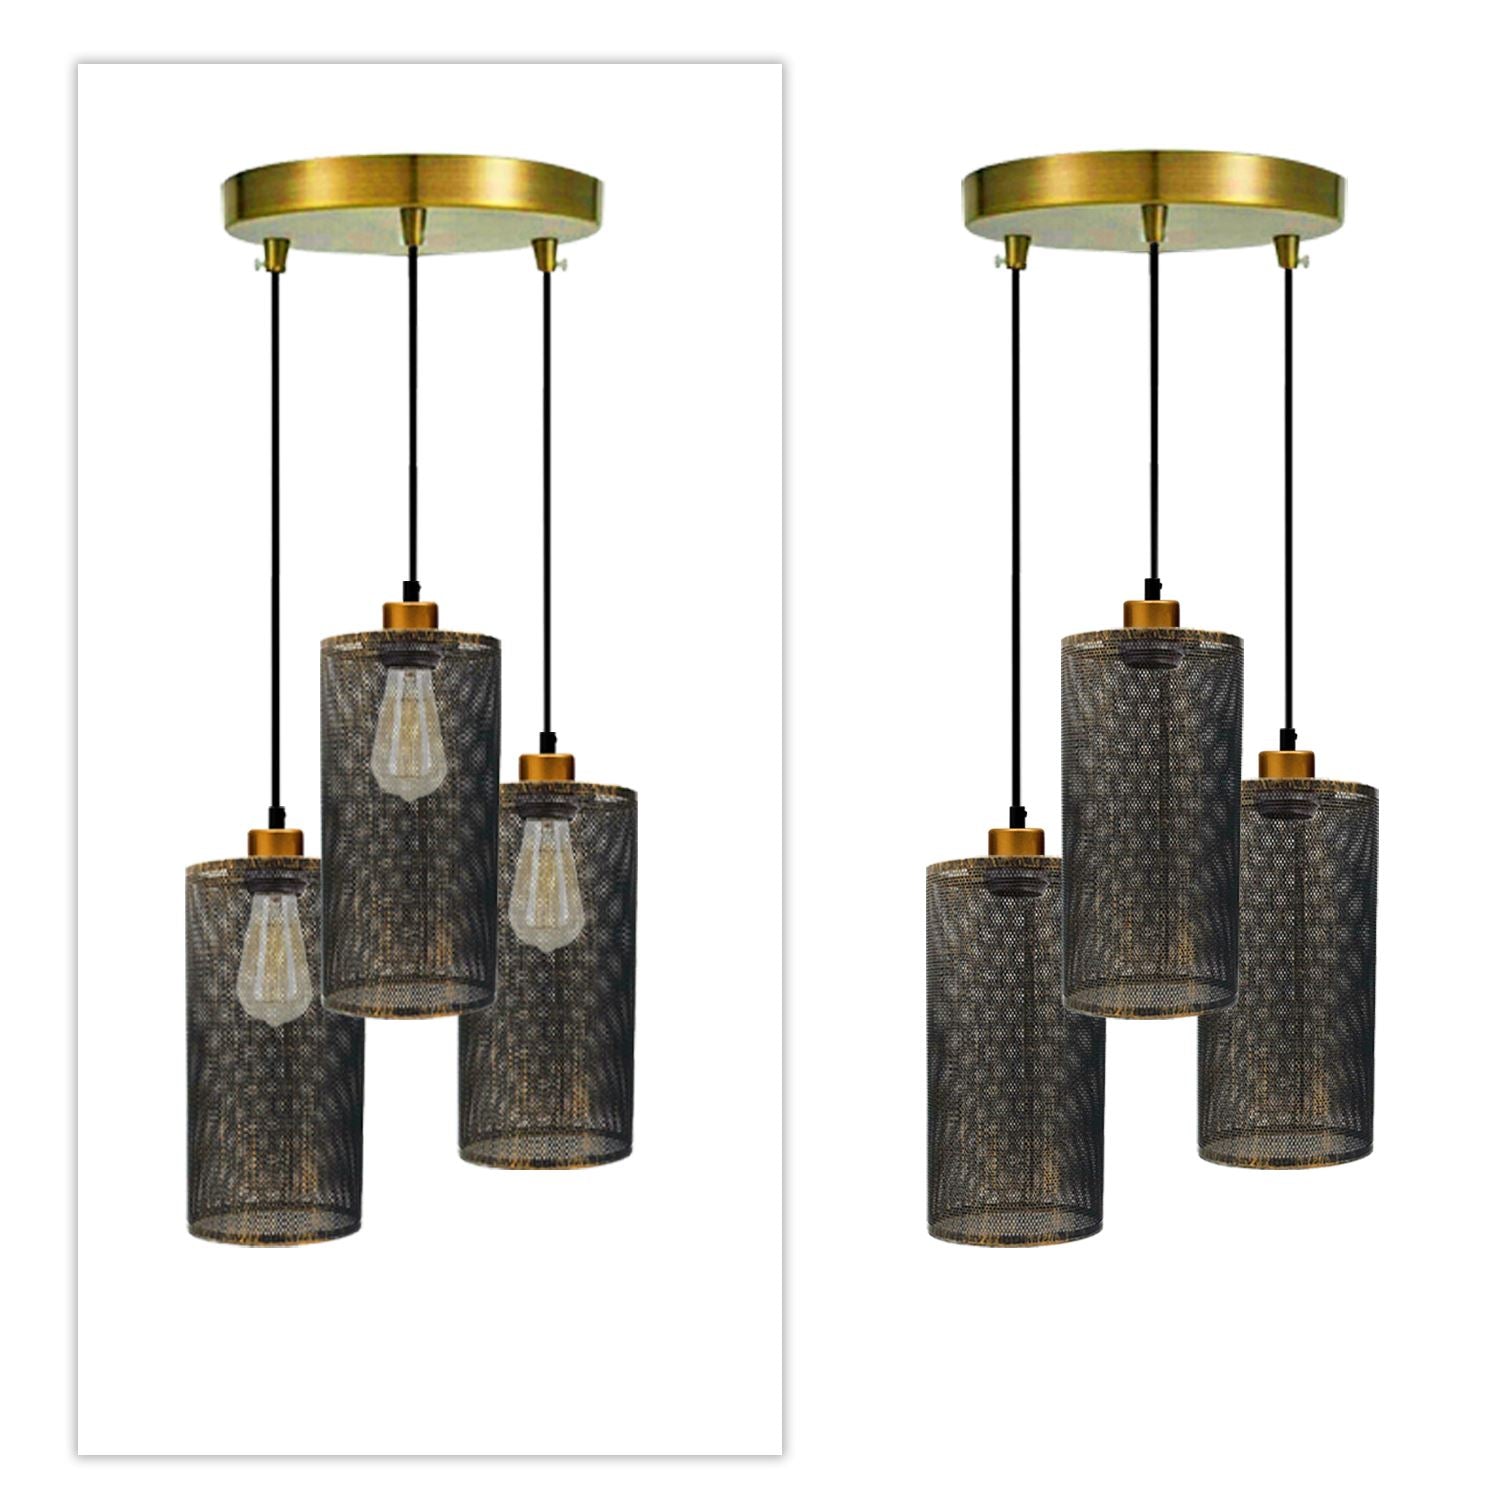 Ceiling Rose 3 Way Hanging Pendant Lamp Shade Light Fitting Lighting Kit UK~1188 - LEDSone UK Ltd